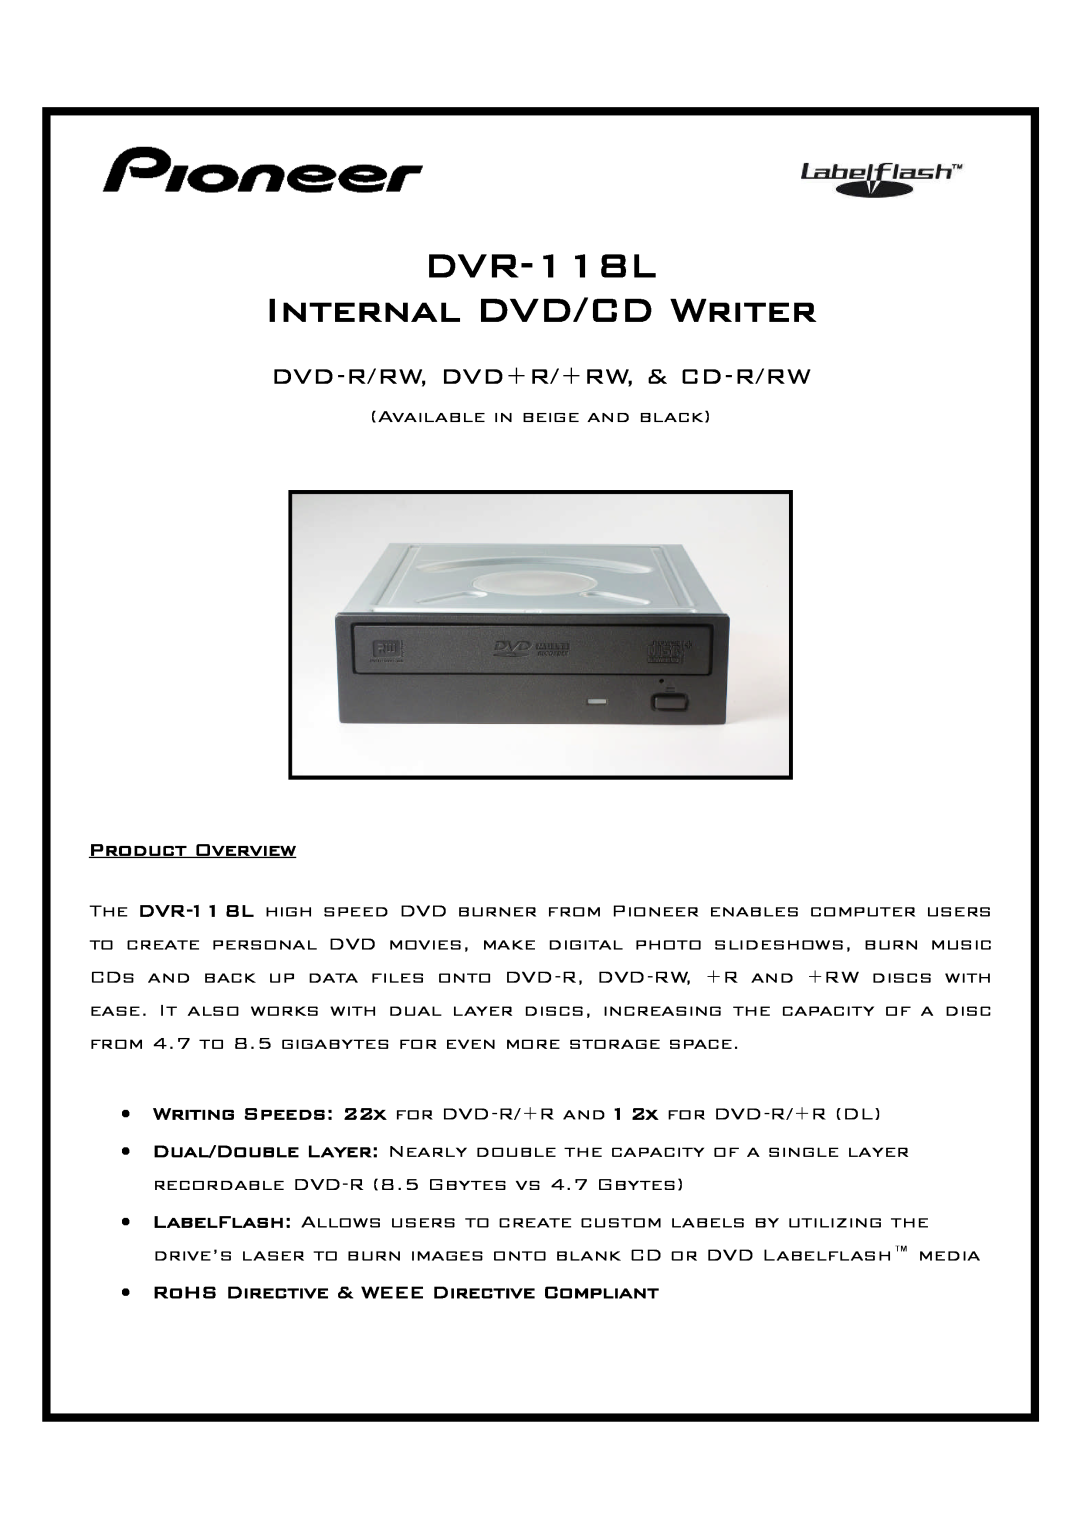 Pioneer manual DVR-118L Internal DVD/CD Writer, Dvd-R/Rw, Dvd+R/+Rw, & Cd-R/Rw, Product Overview 